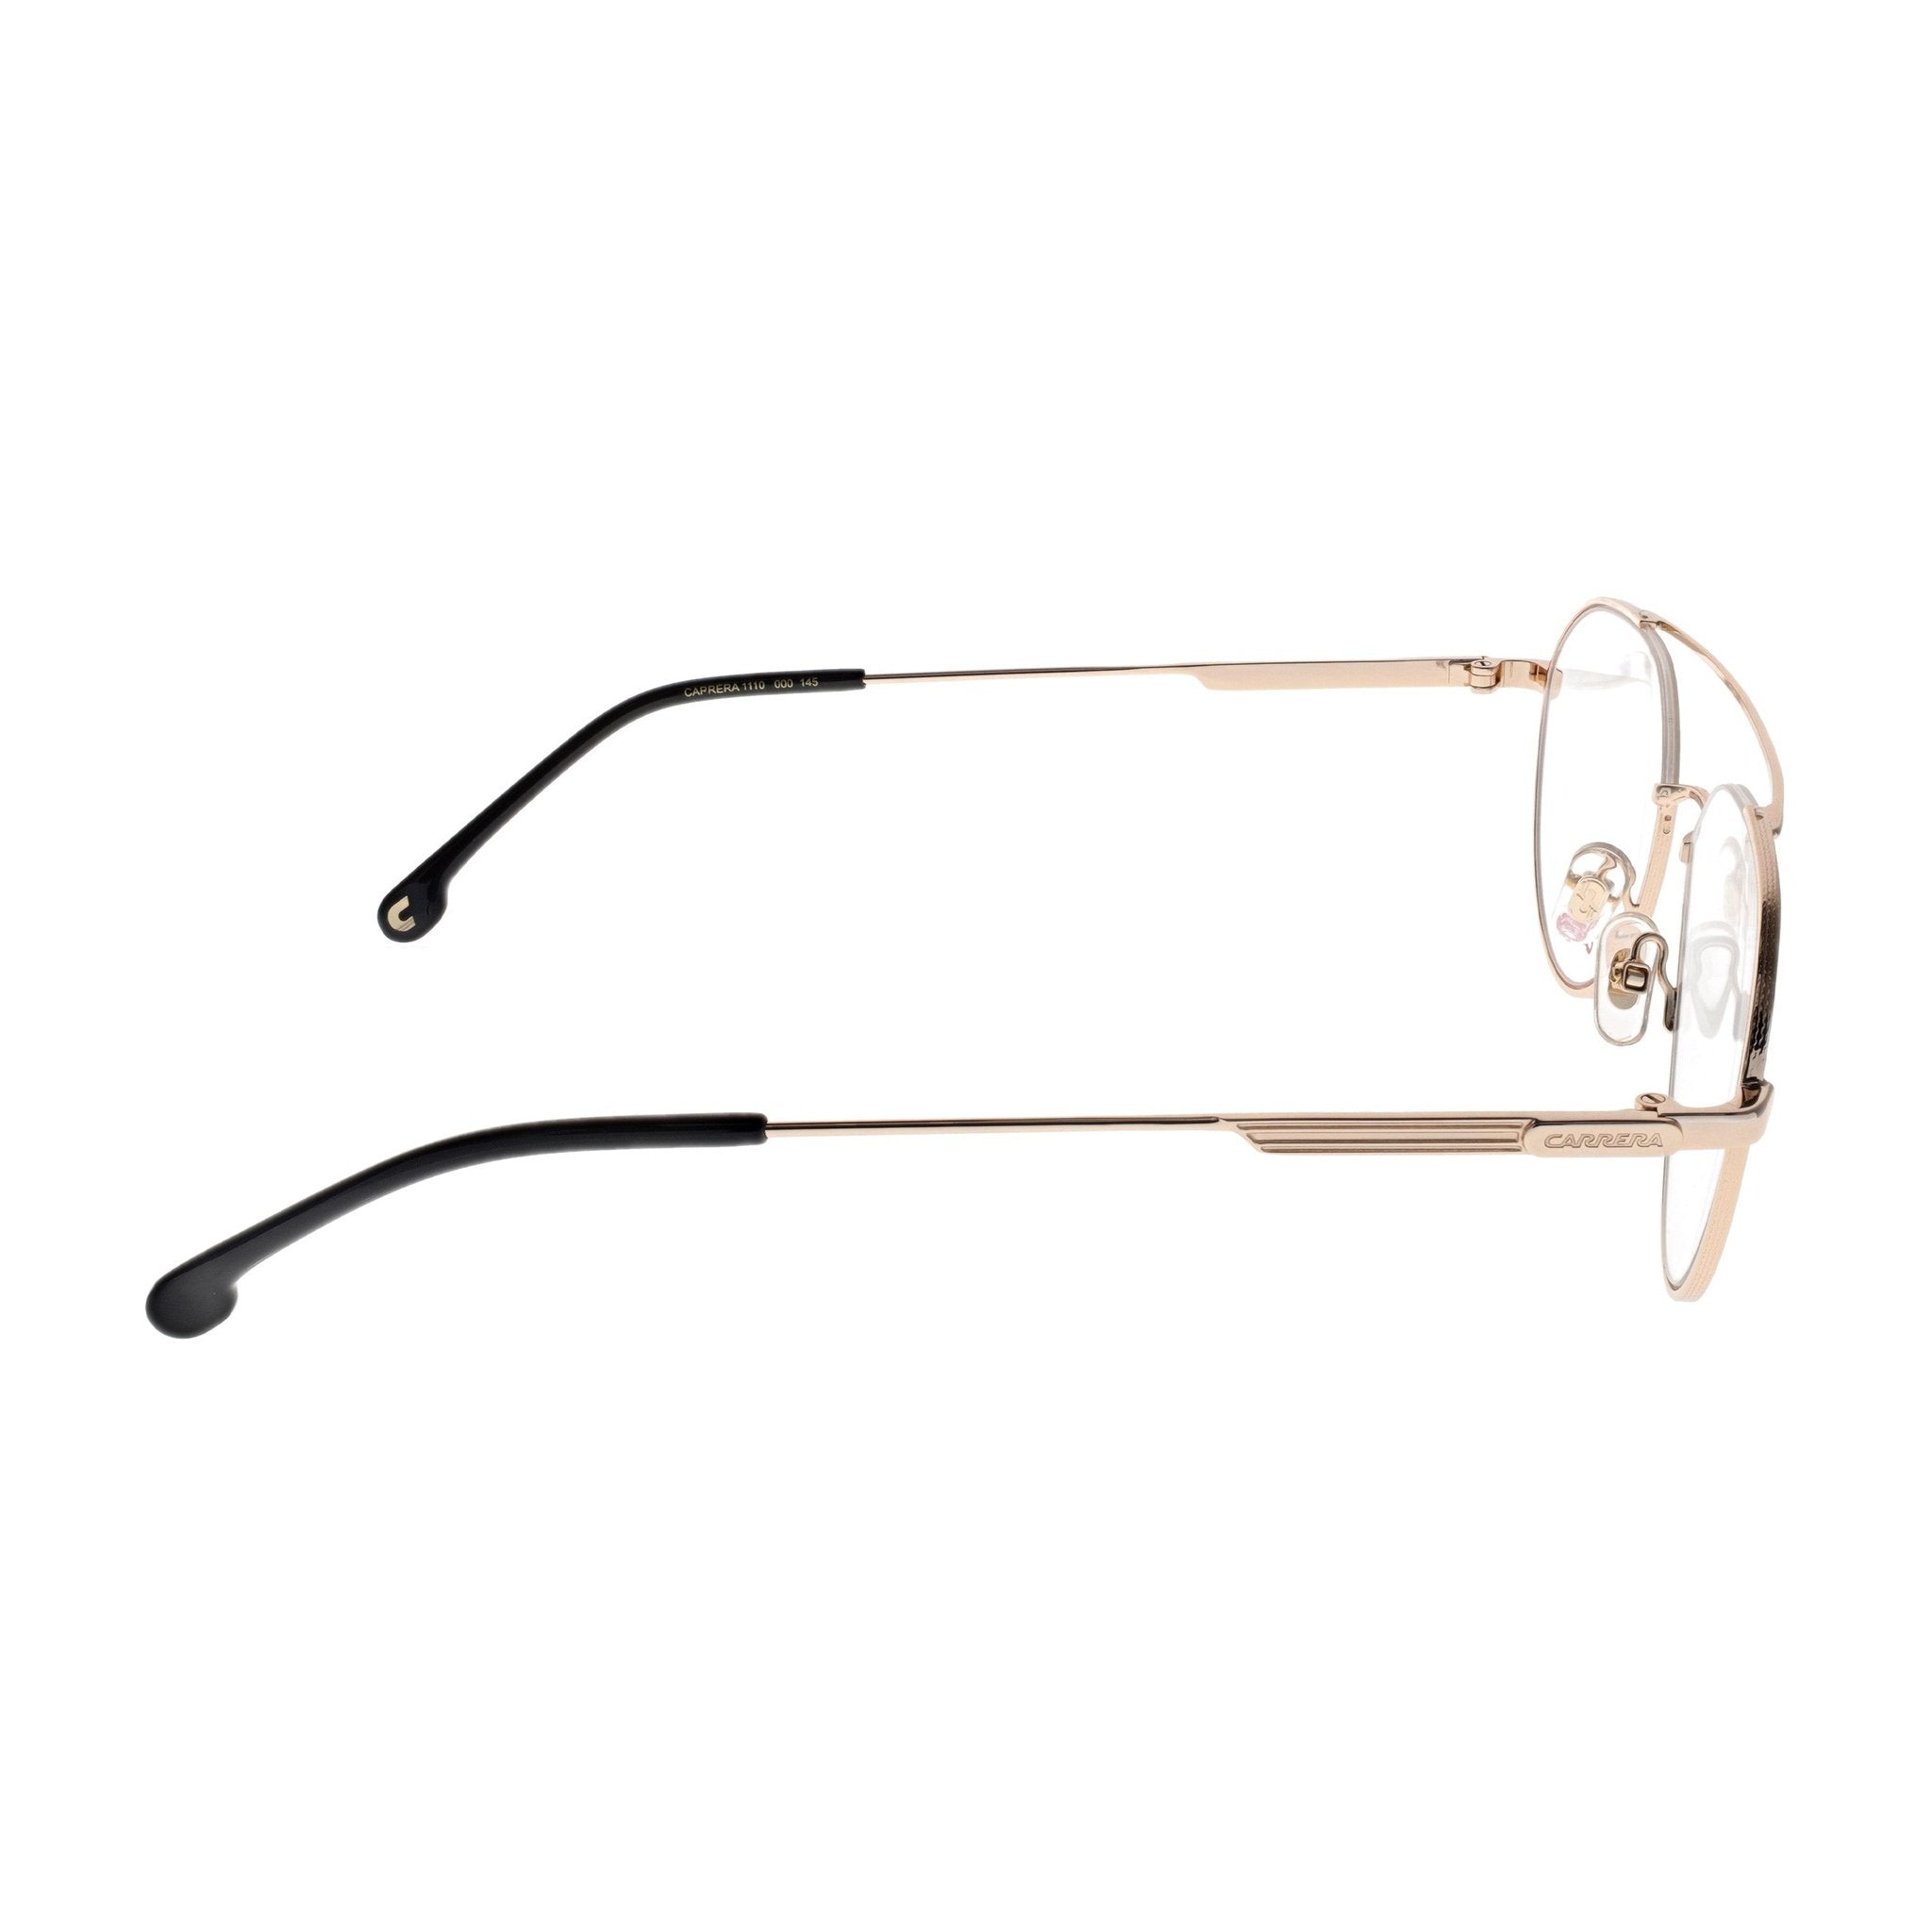 Carrera Eyeglasses - 1110